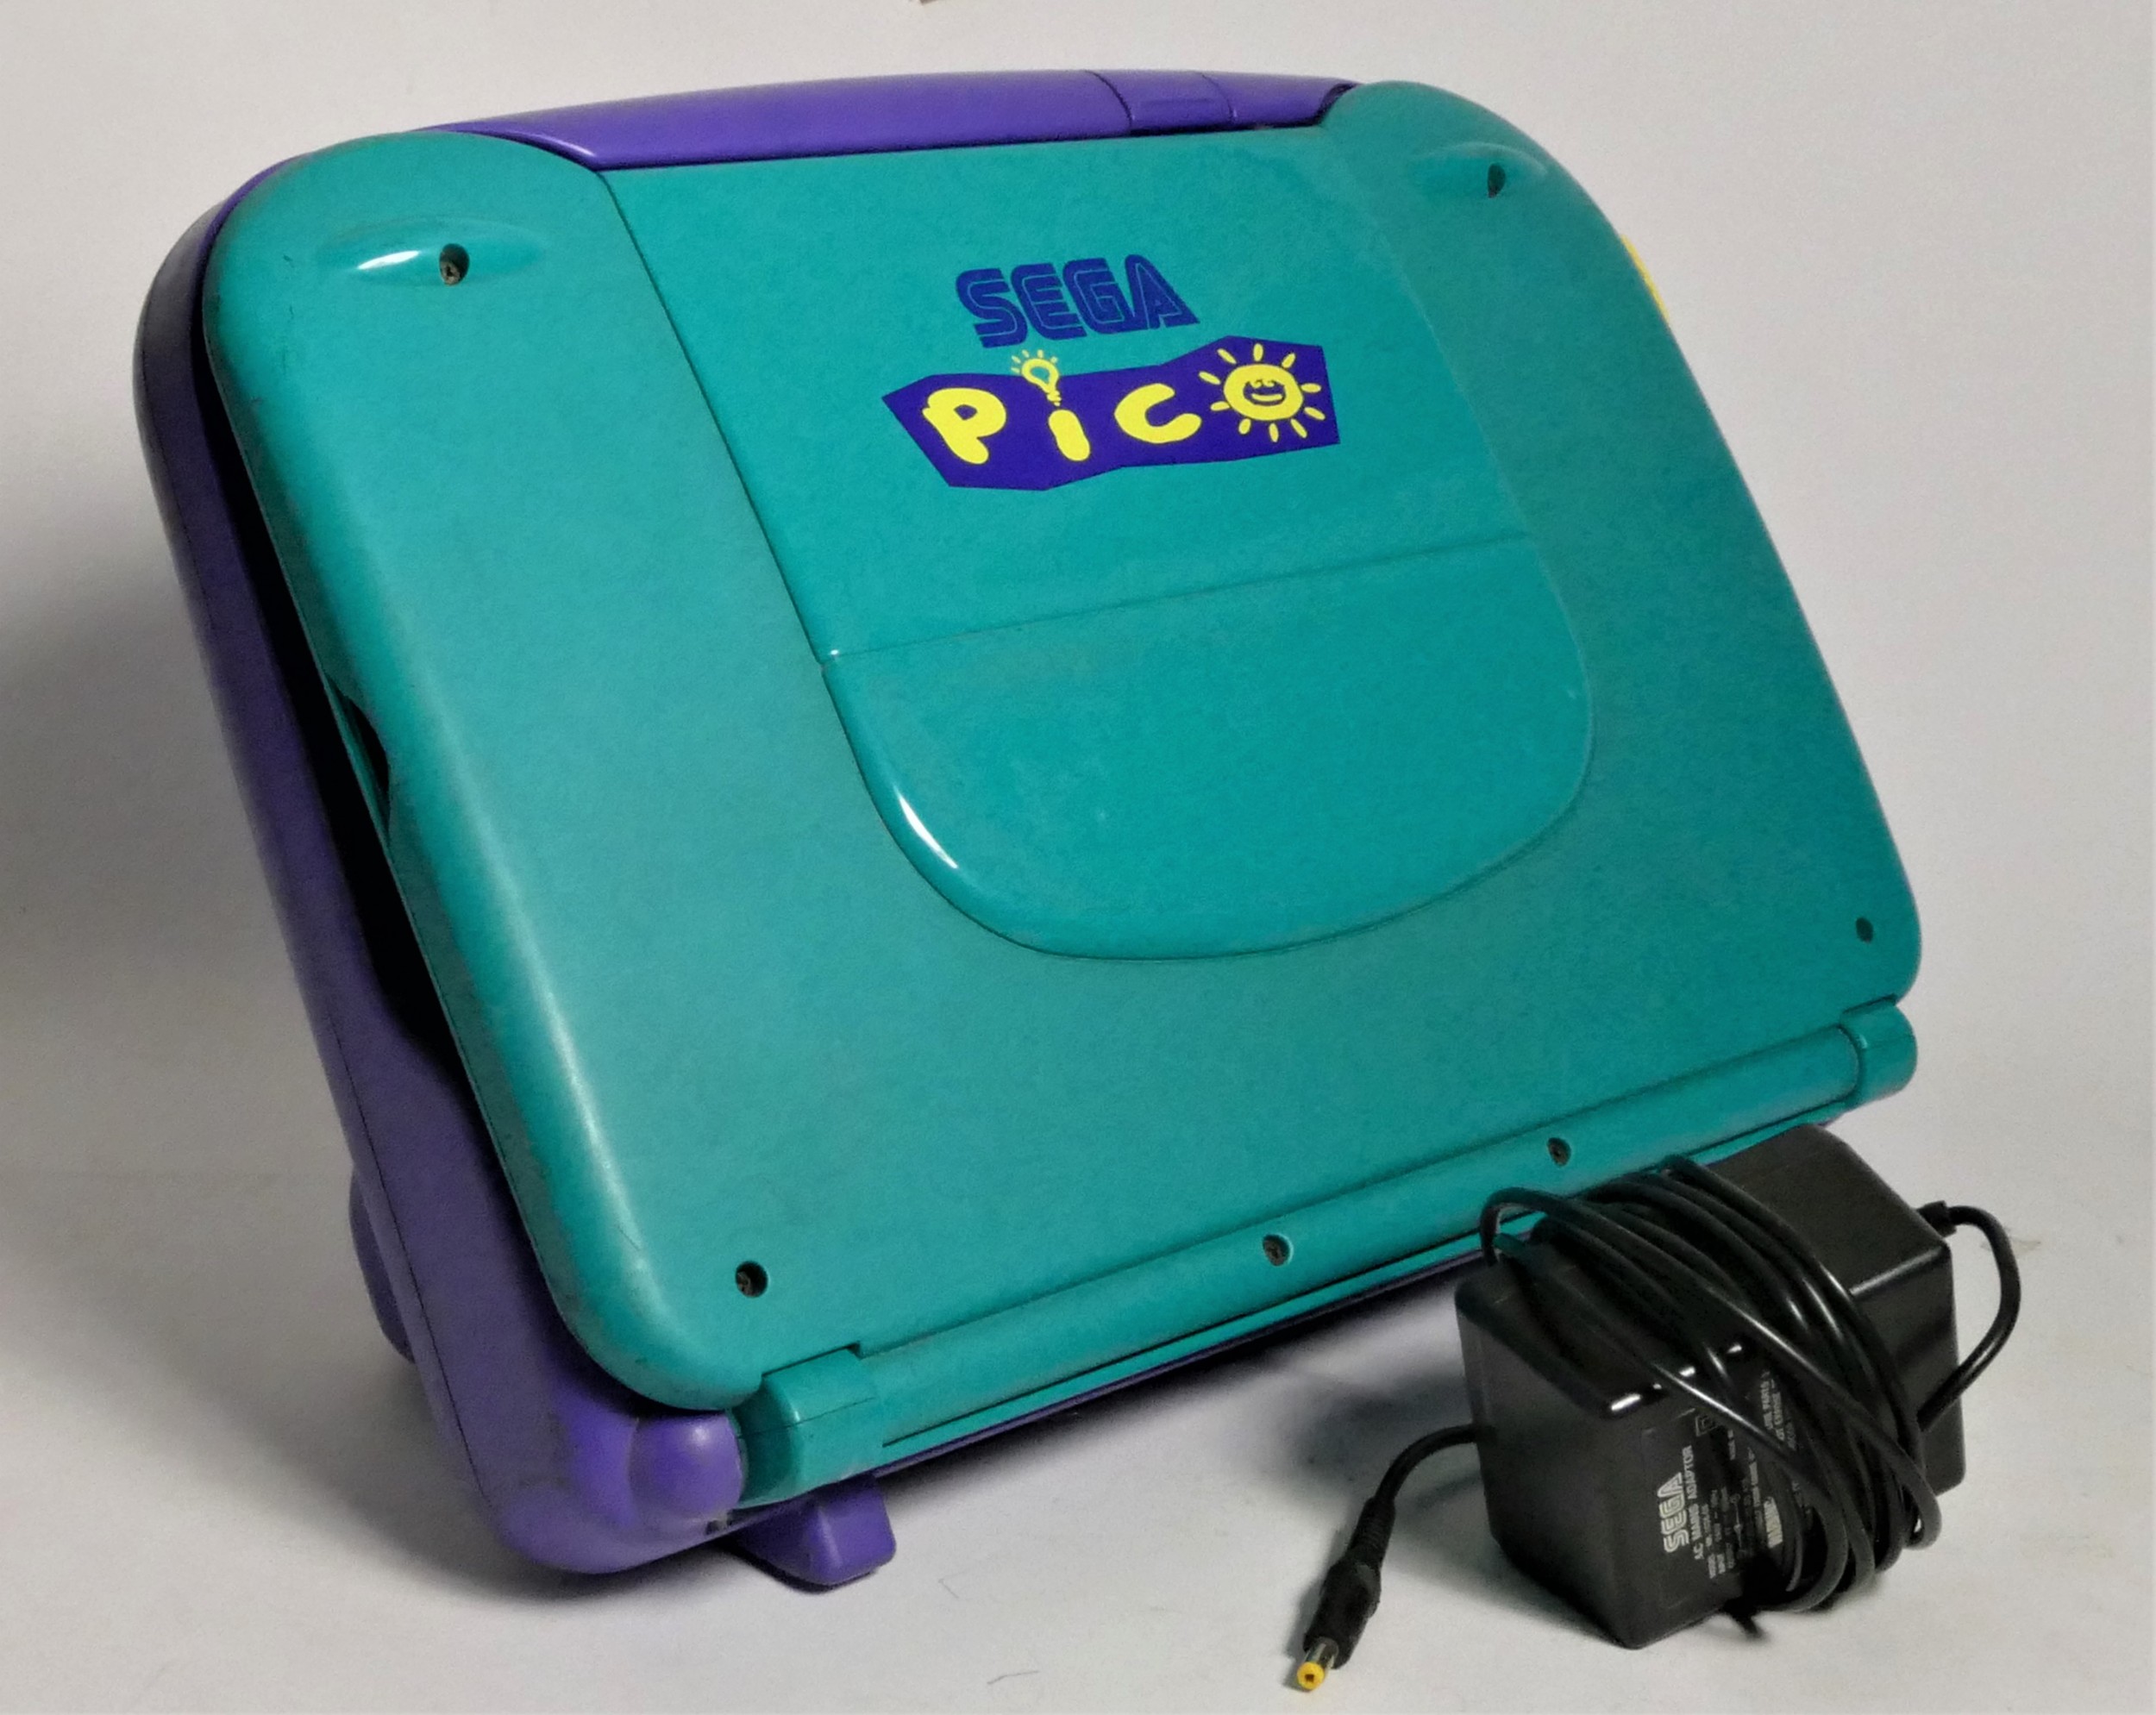 A Sega Pico video games console (450060493) with AC cable